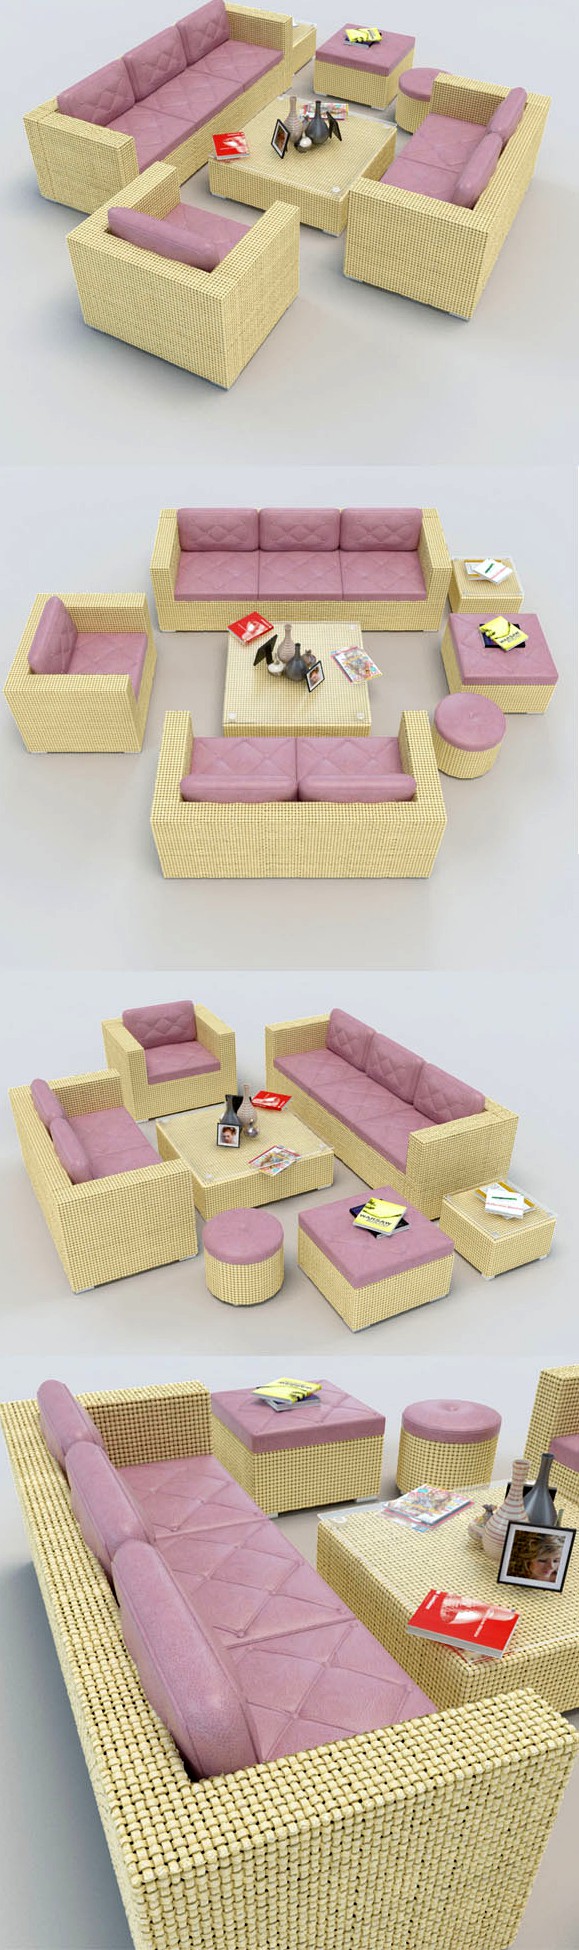 Rattan Sofa set_1